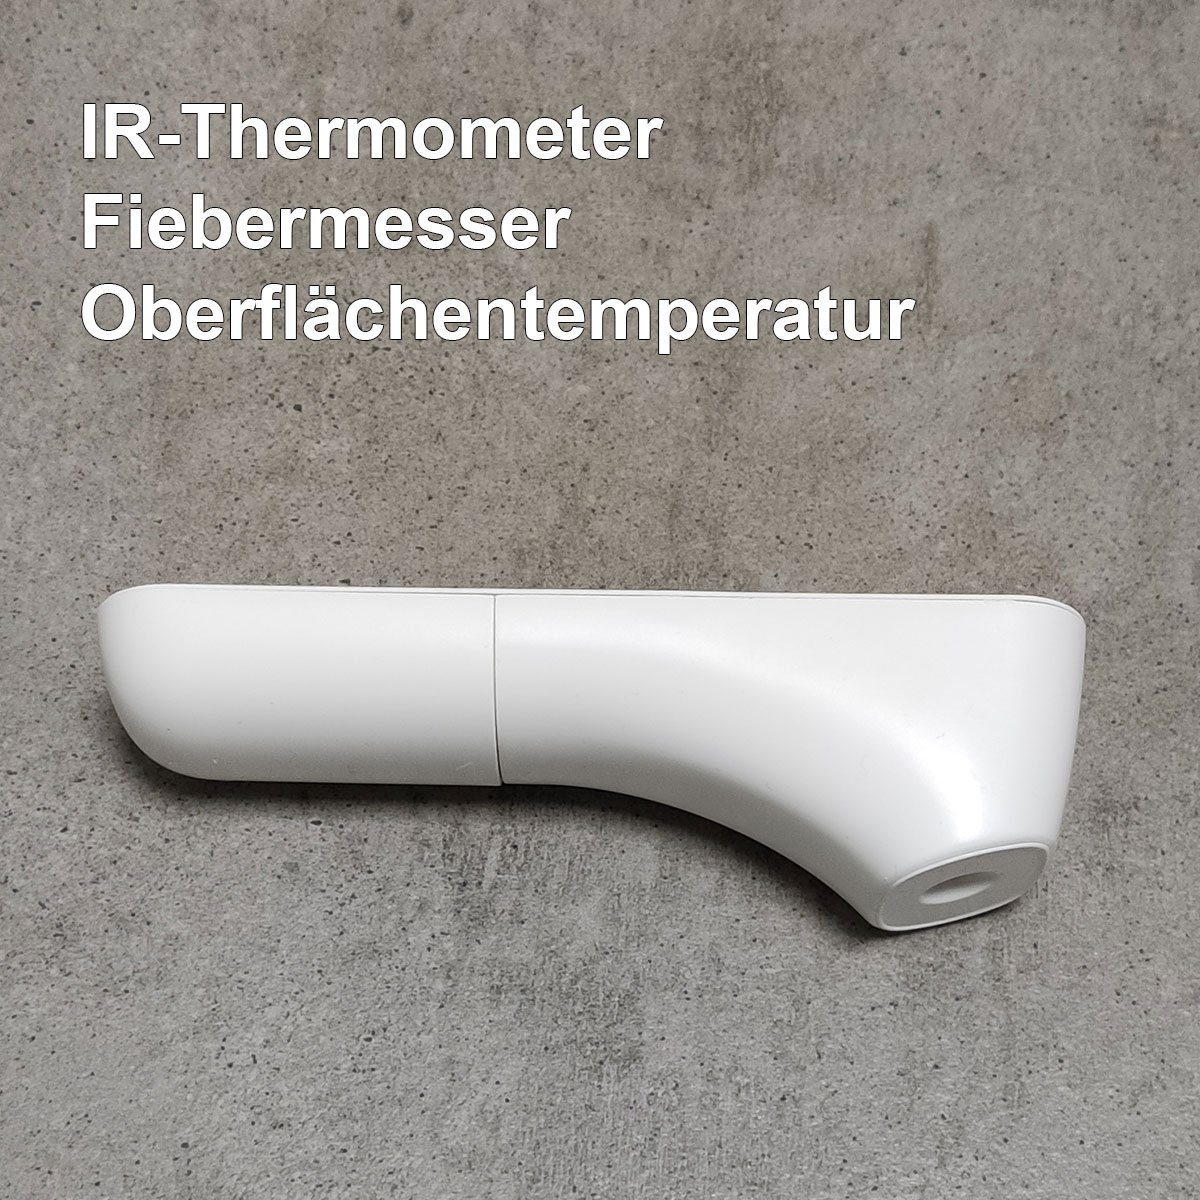 Altersgruppen 1-tlg., Infrarot, Temperaturmessung Infrarot-Fieberthermometer alle Für IR Forca Thermometer Fieberthermometer geeignet